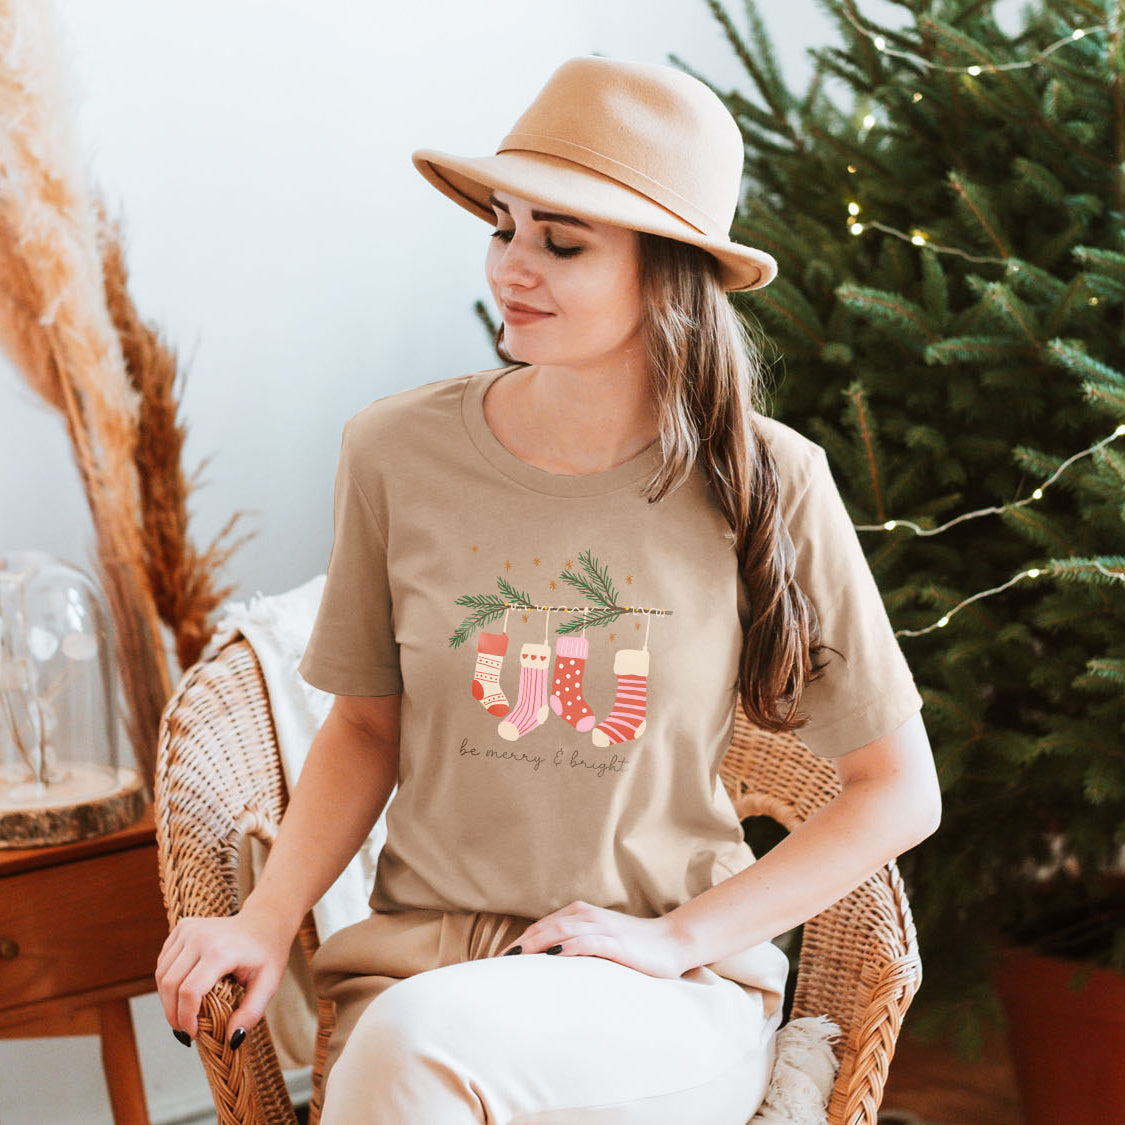 Christmas Socks Hanging On The Tree Be Merry & Bright T-shirt - Christmas Winter Retro Vintage Design Printed Tee Shirt